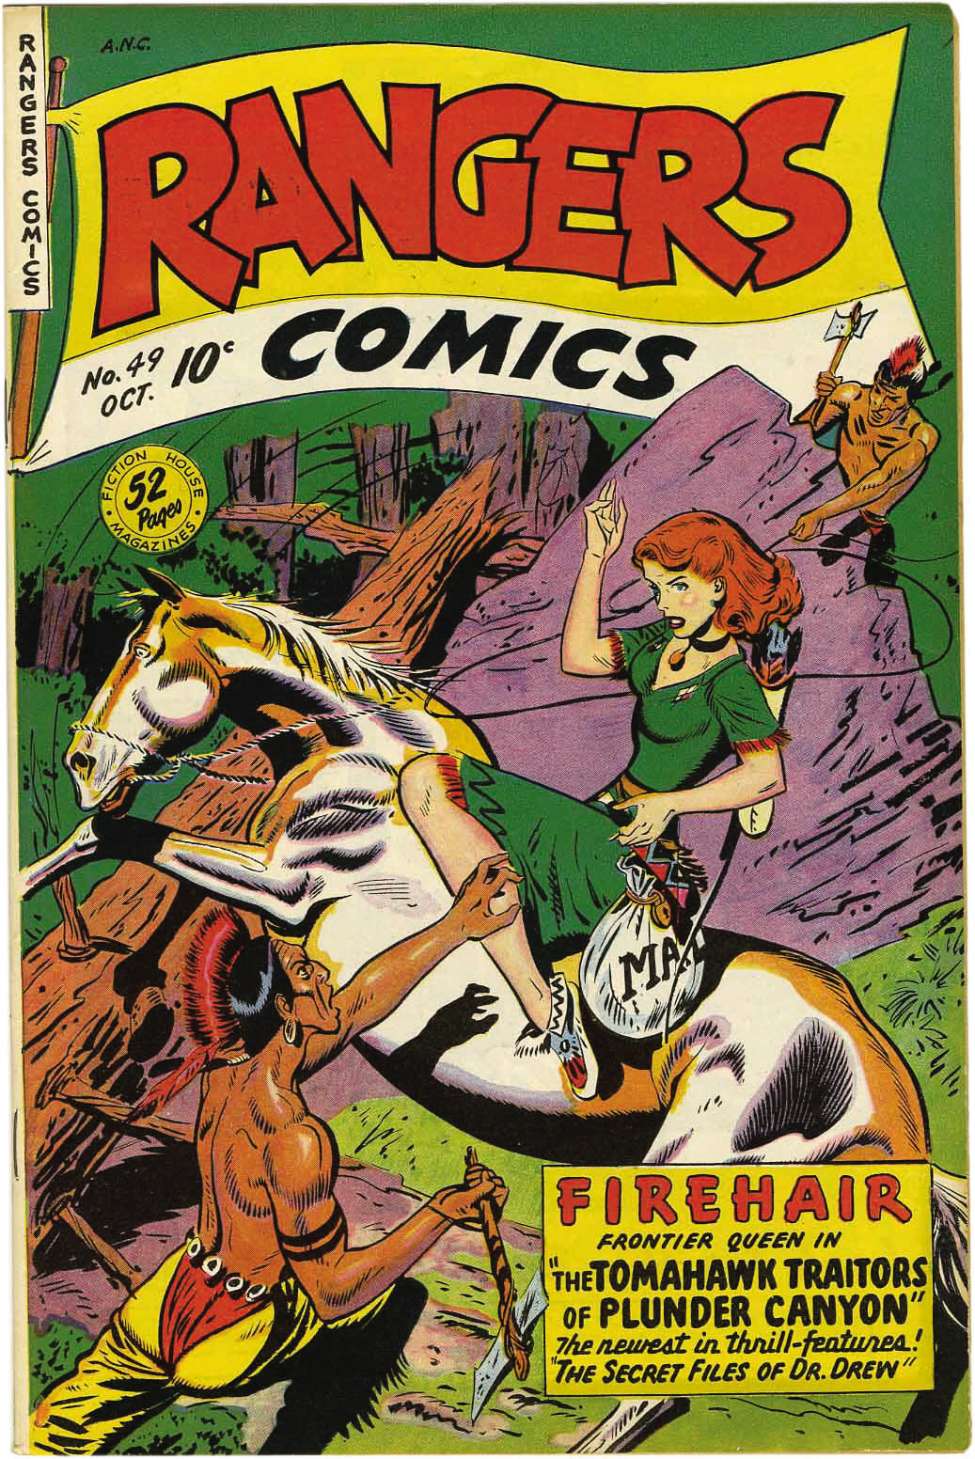 Comic Book Cover For Rangers Comics 49